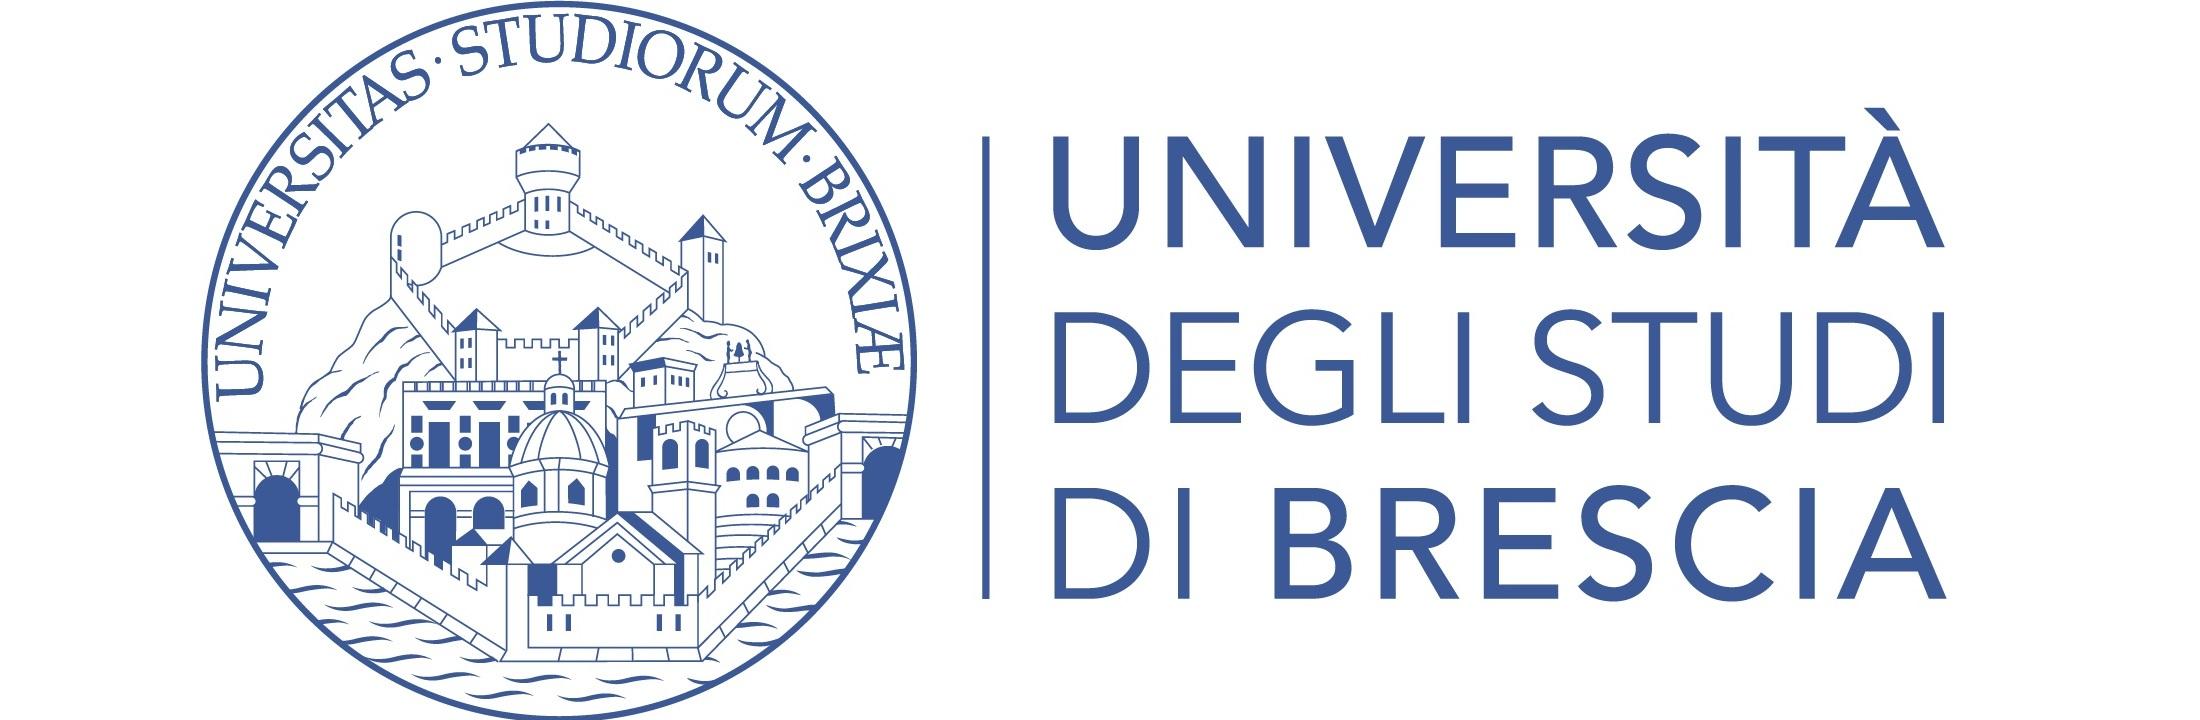 President Marco Simoni at the University of Brescia Open Day